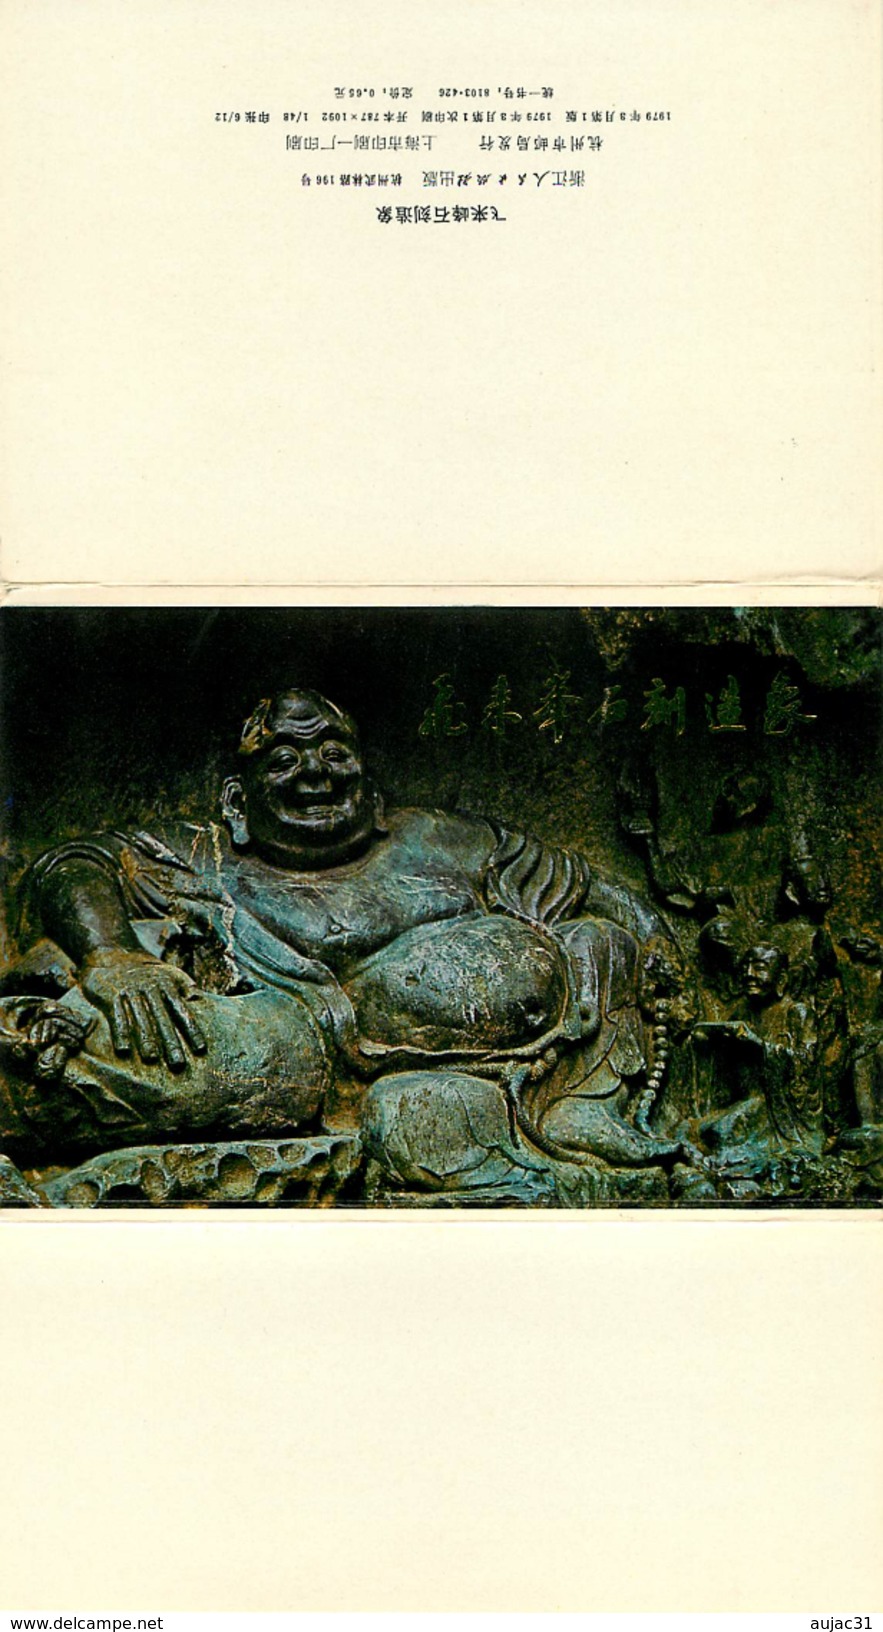 Chine - China - Hangzhou - Religions & croyances - Bouddhisme - Bouddha - Buddha - 12 cartes avec pochette - bon état